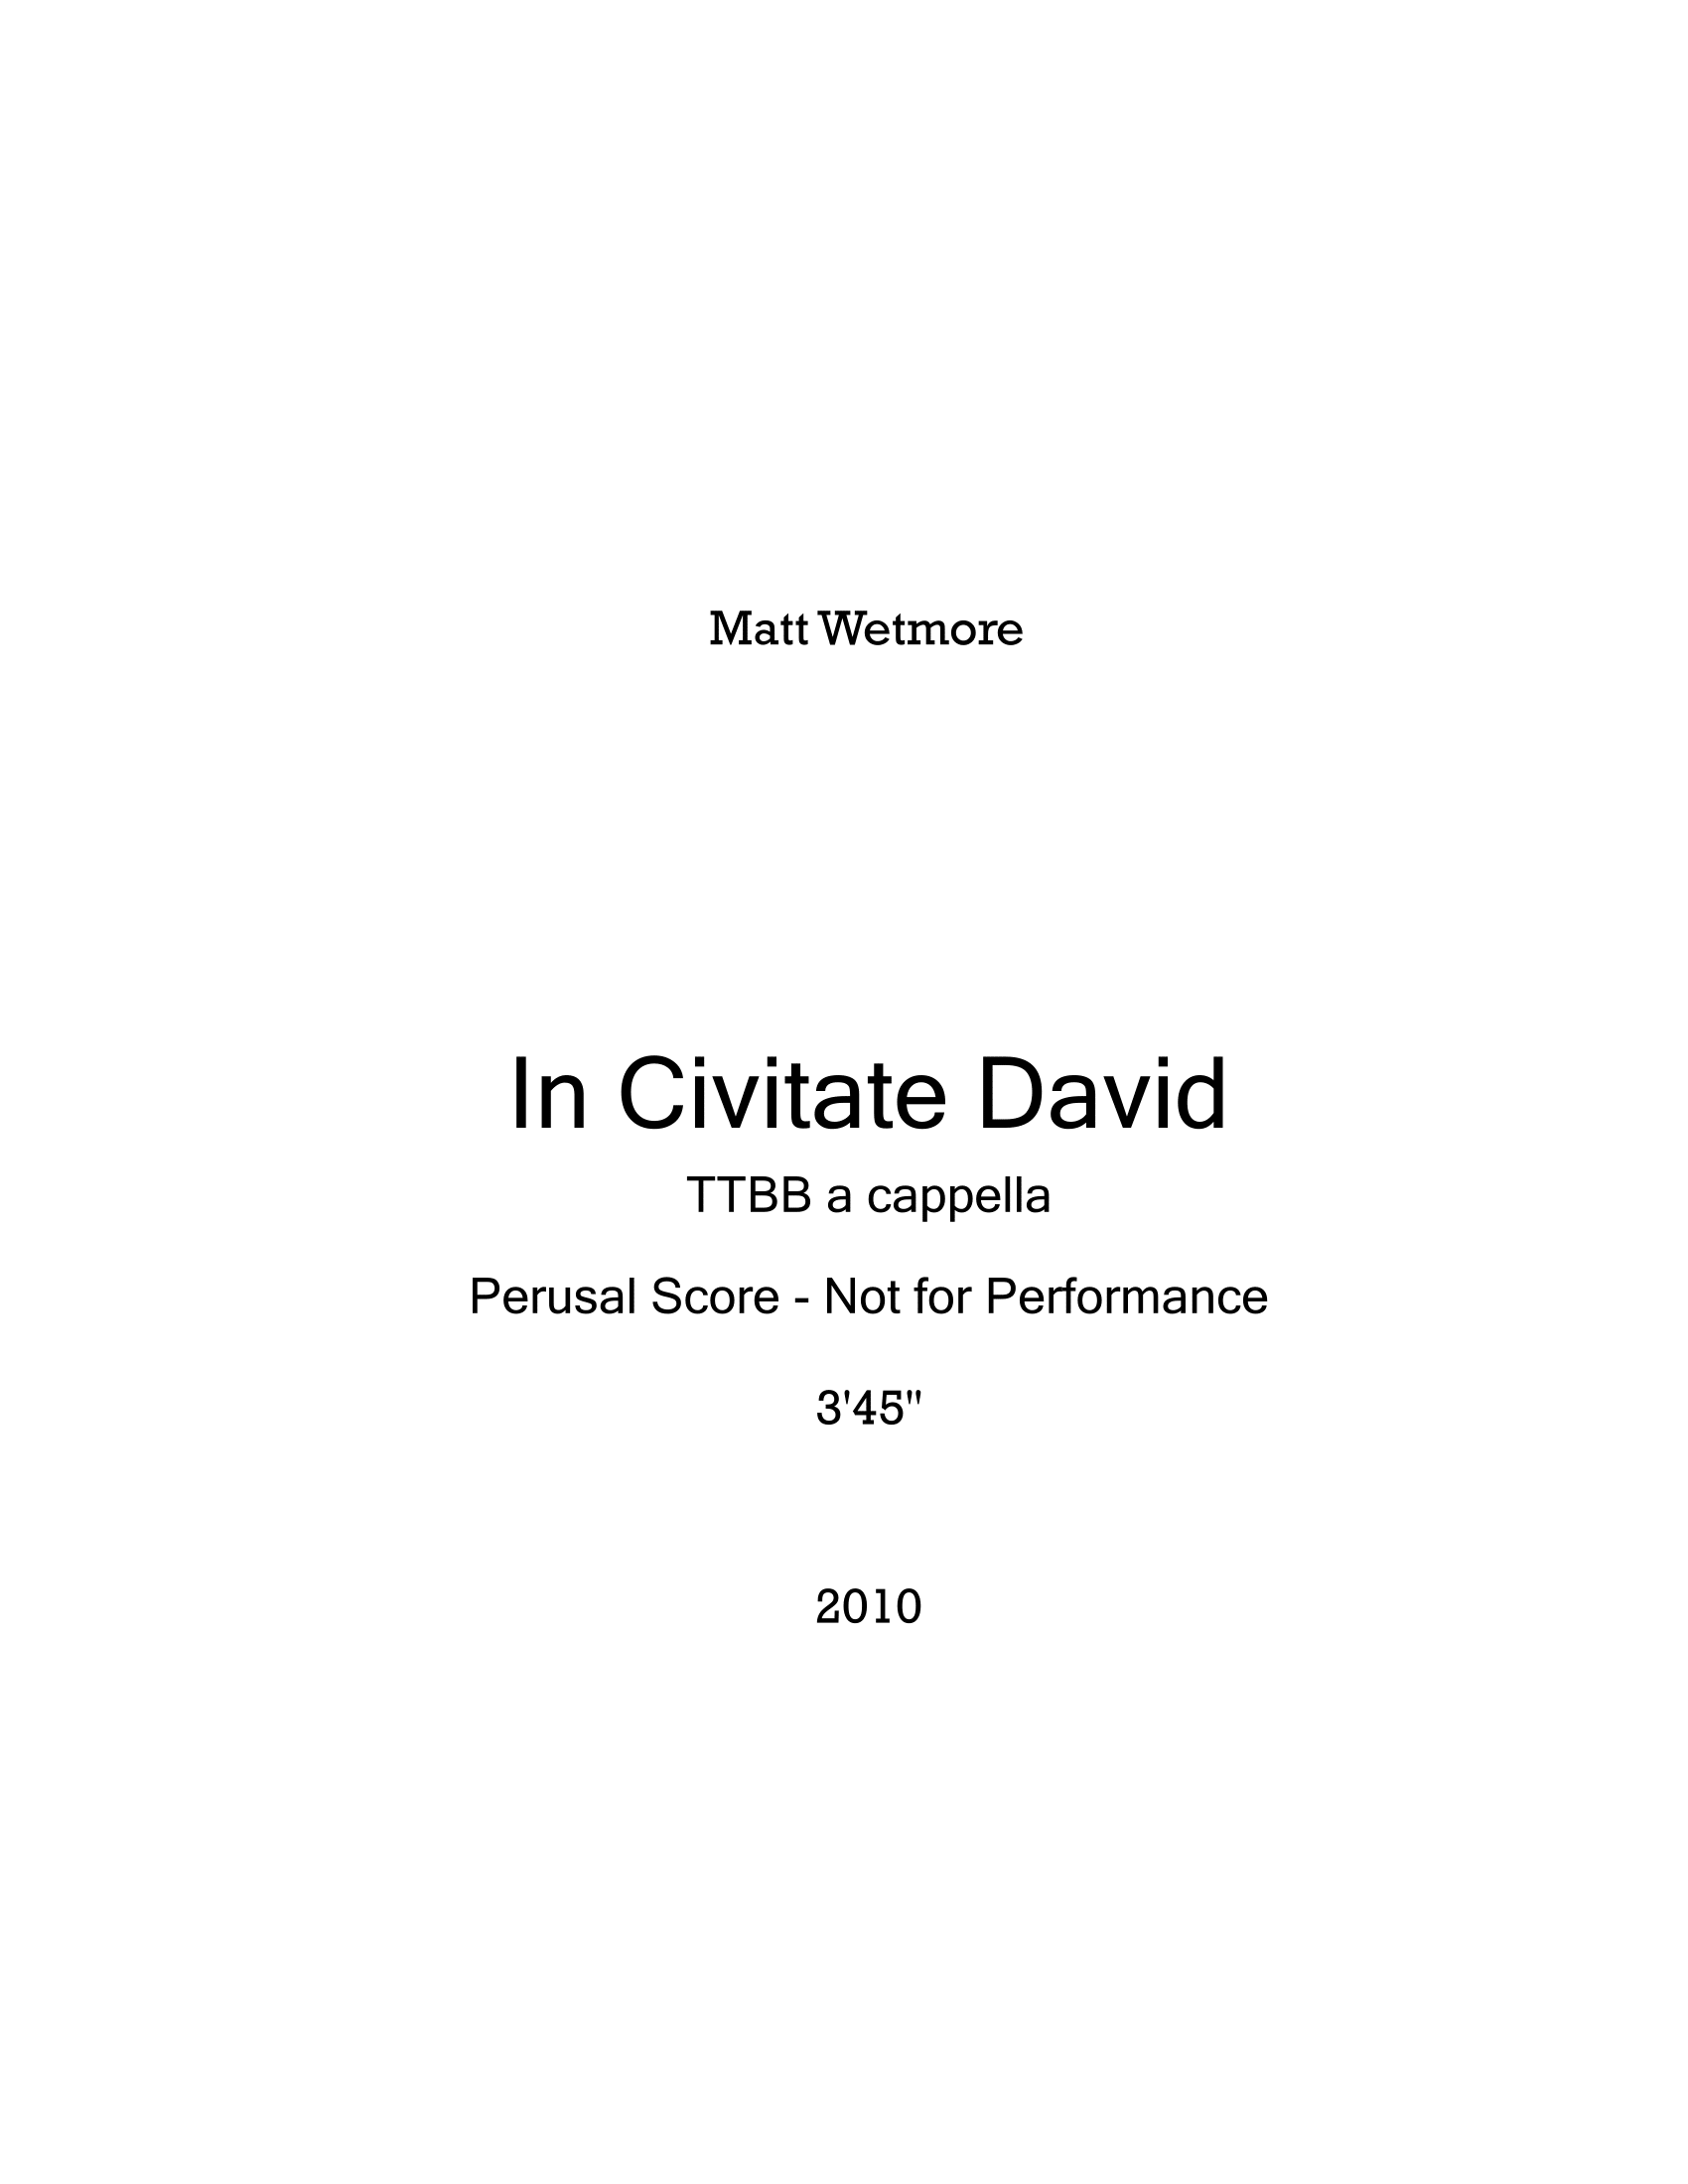 In Civitate David Perusal-1.png